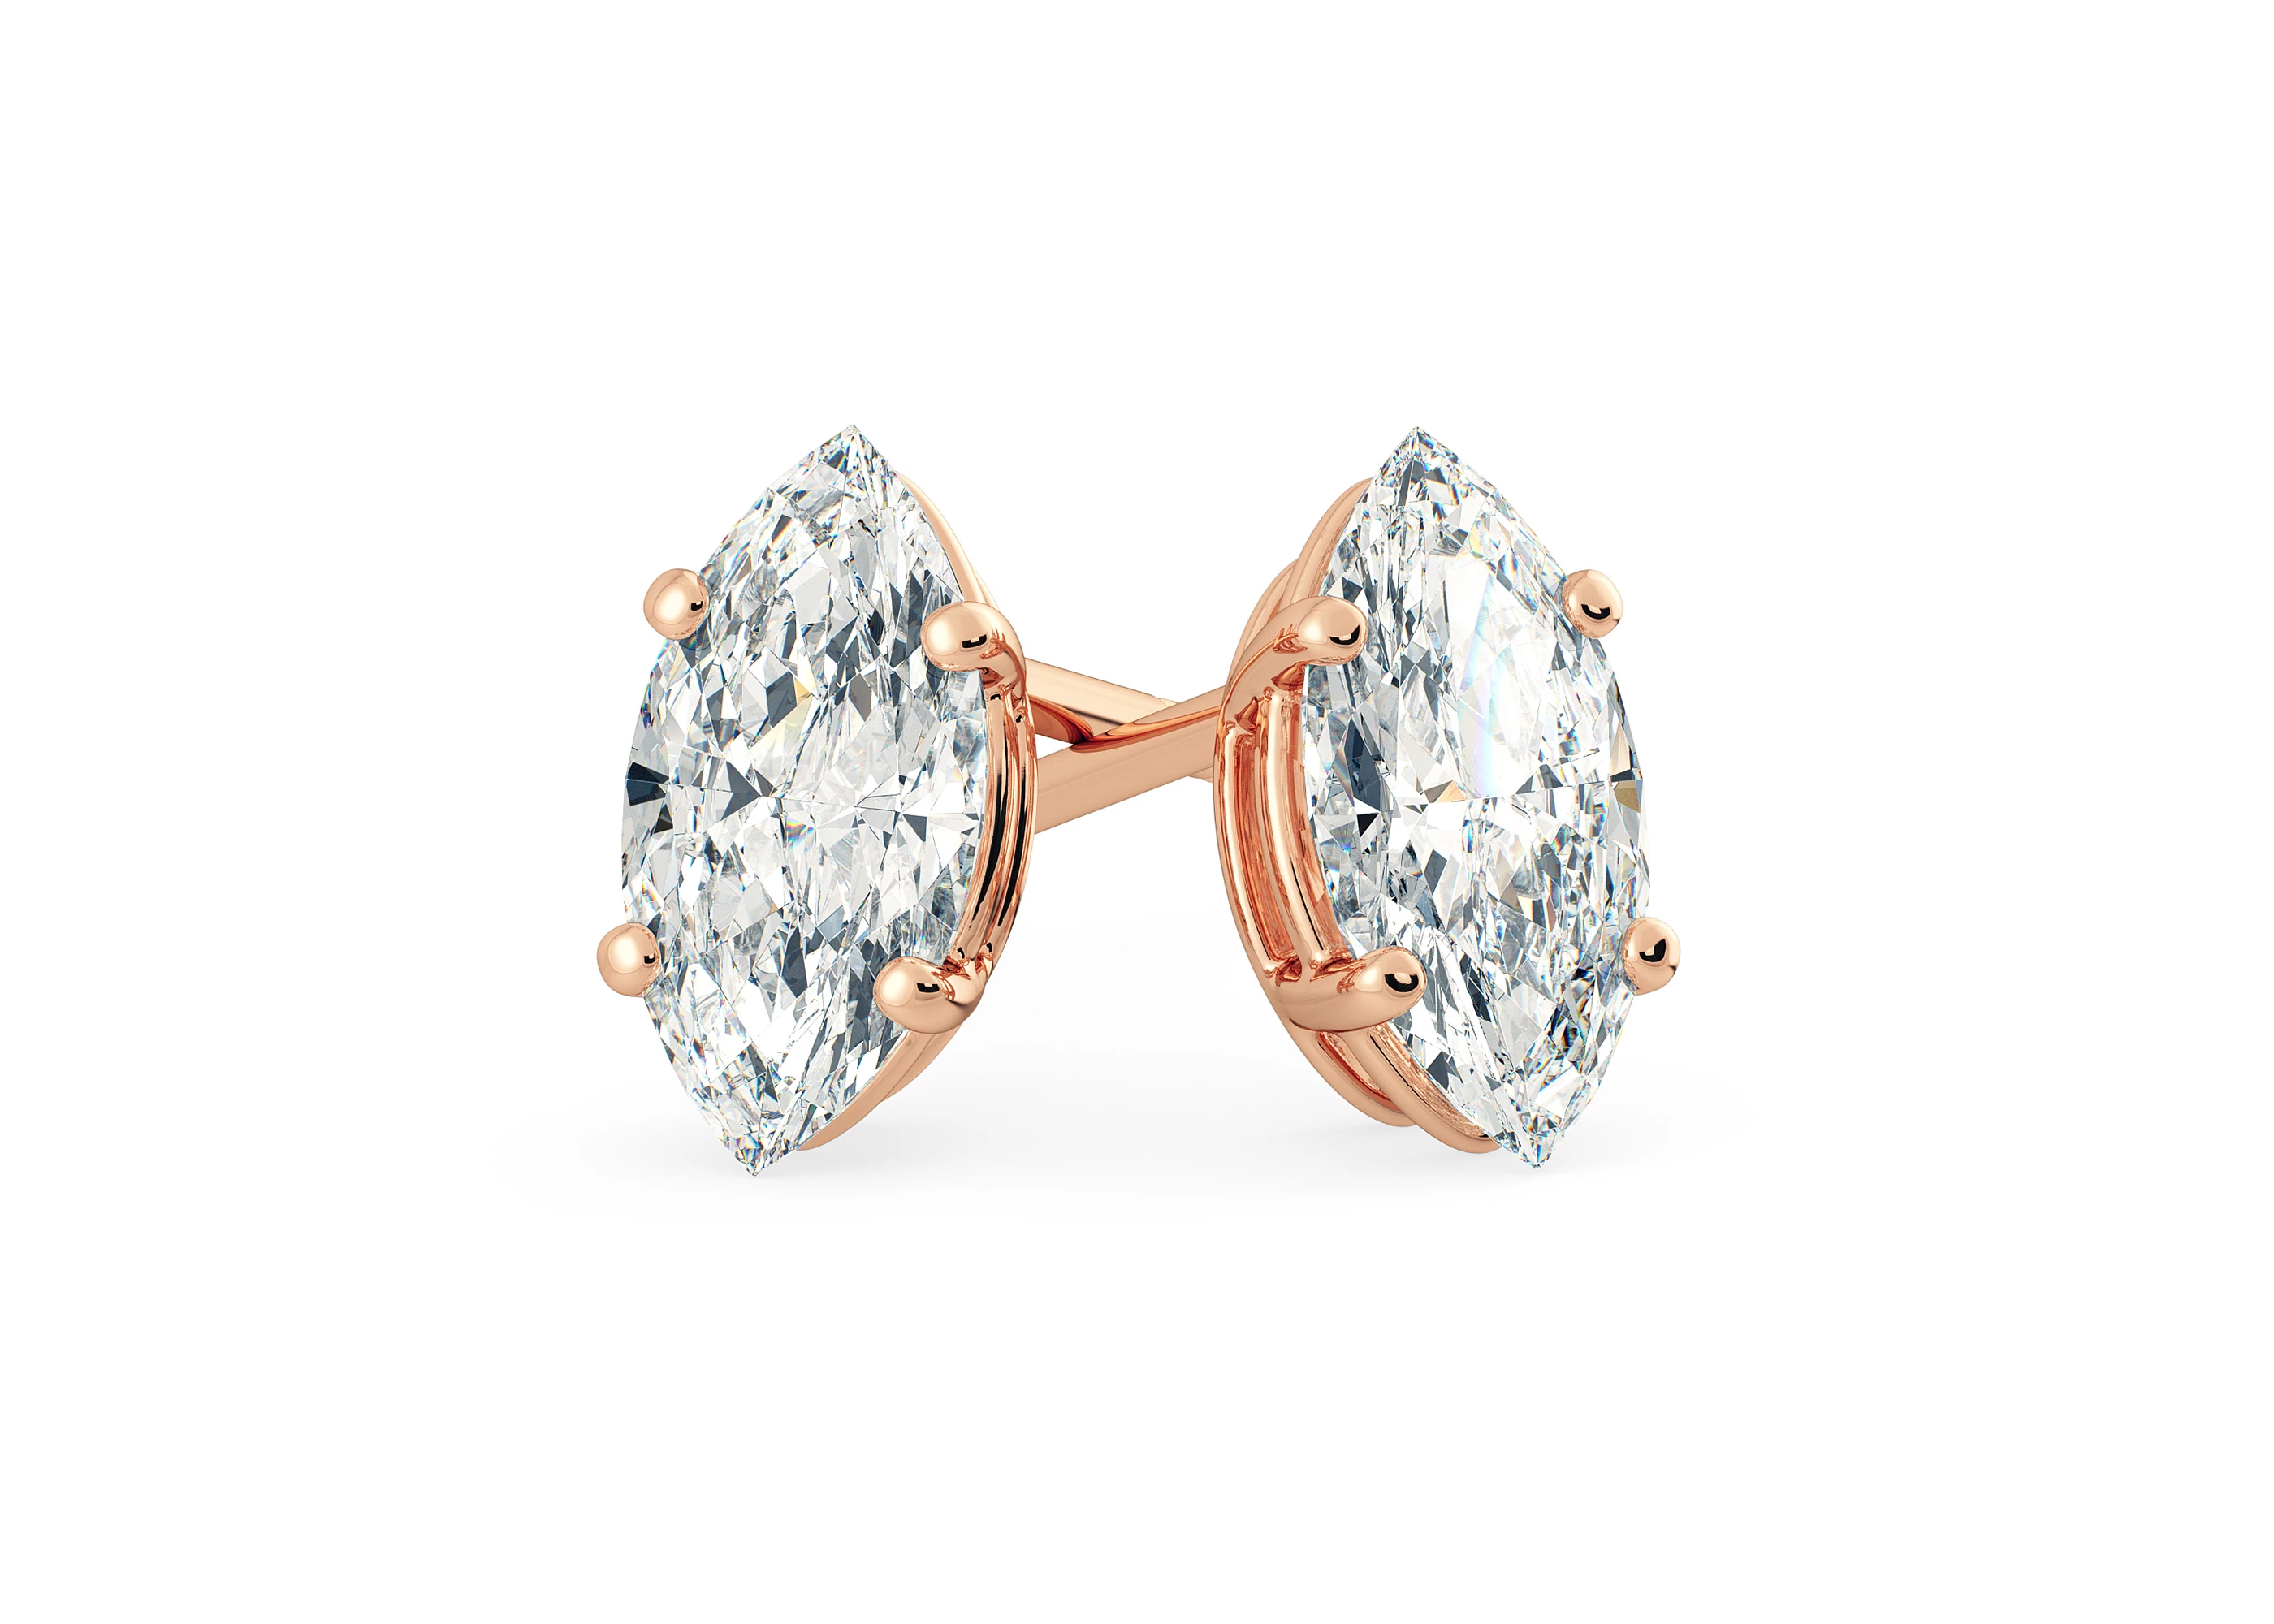 One Carat Marquise Diamond Stud Earrings in 18K Rose Gold